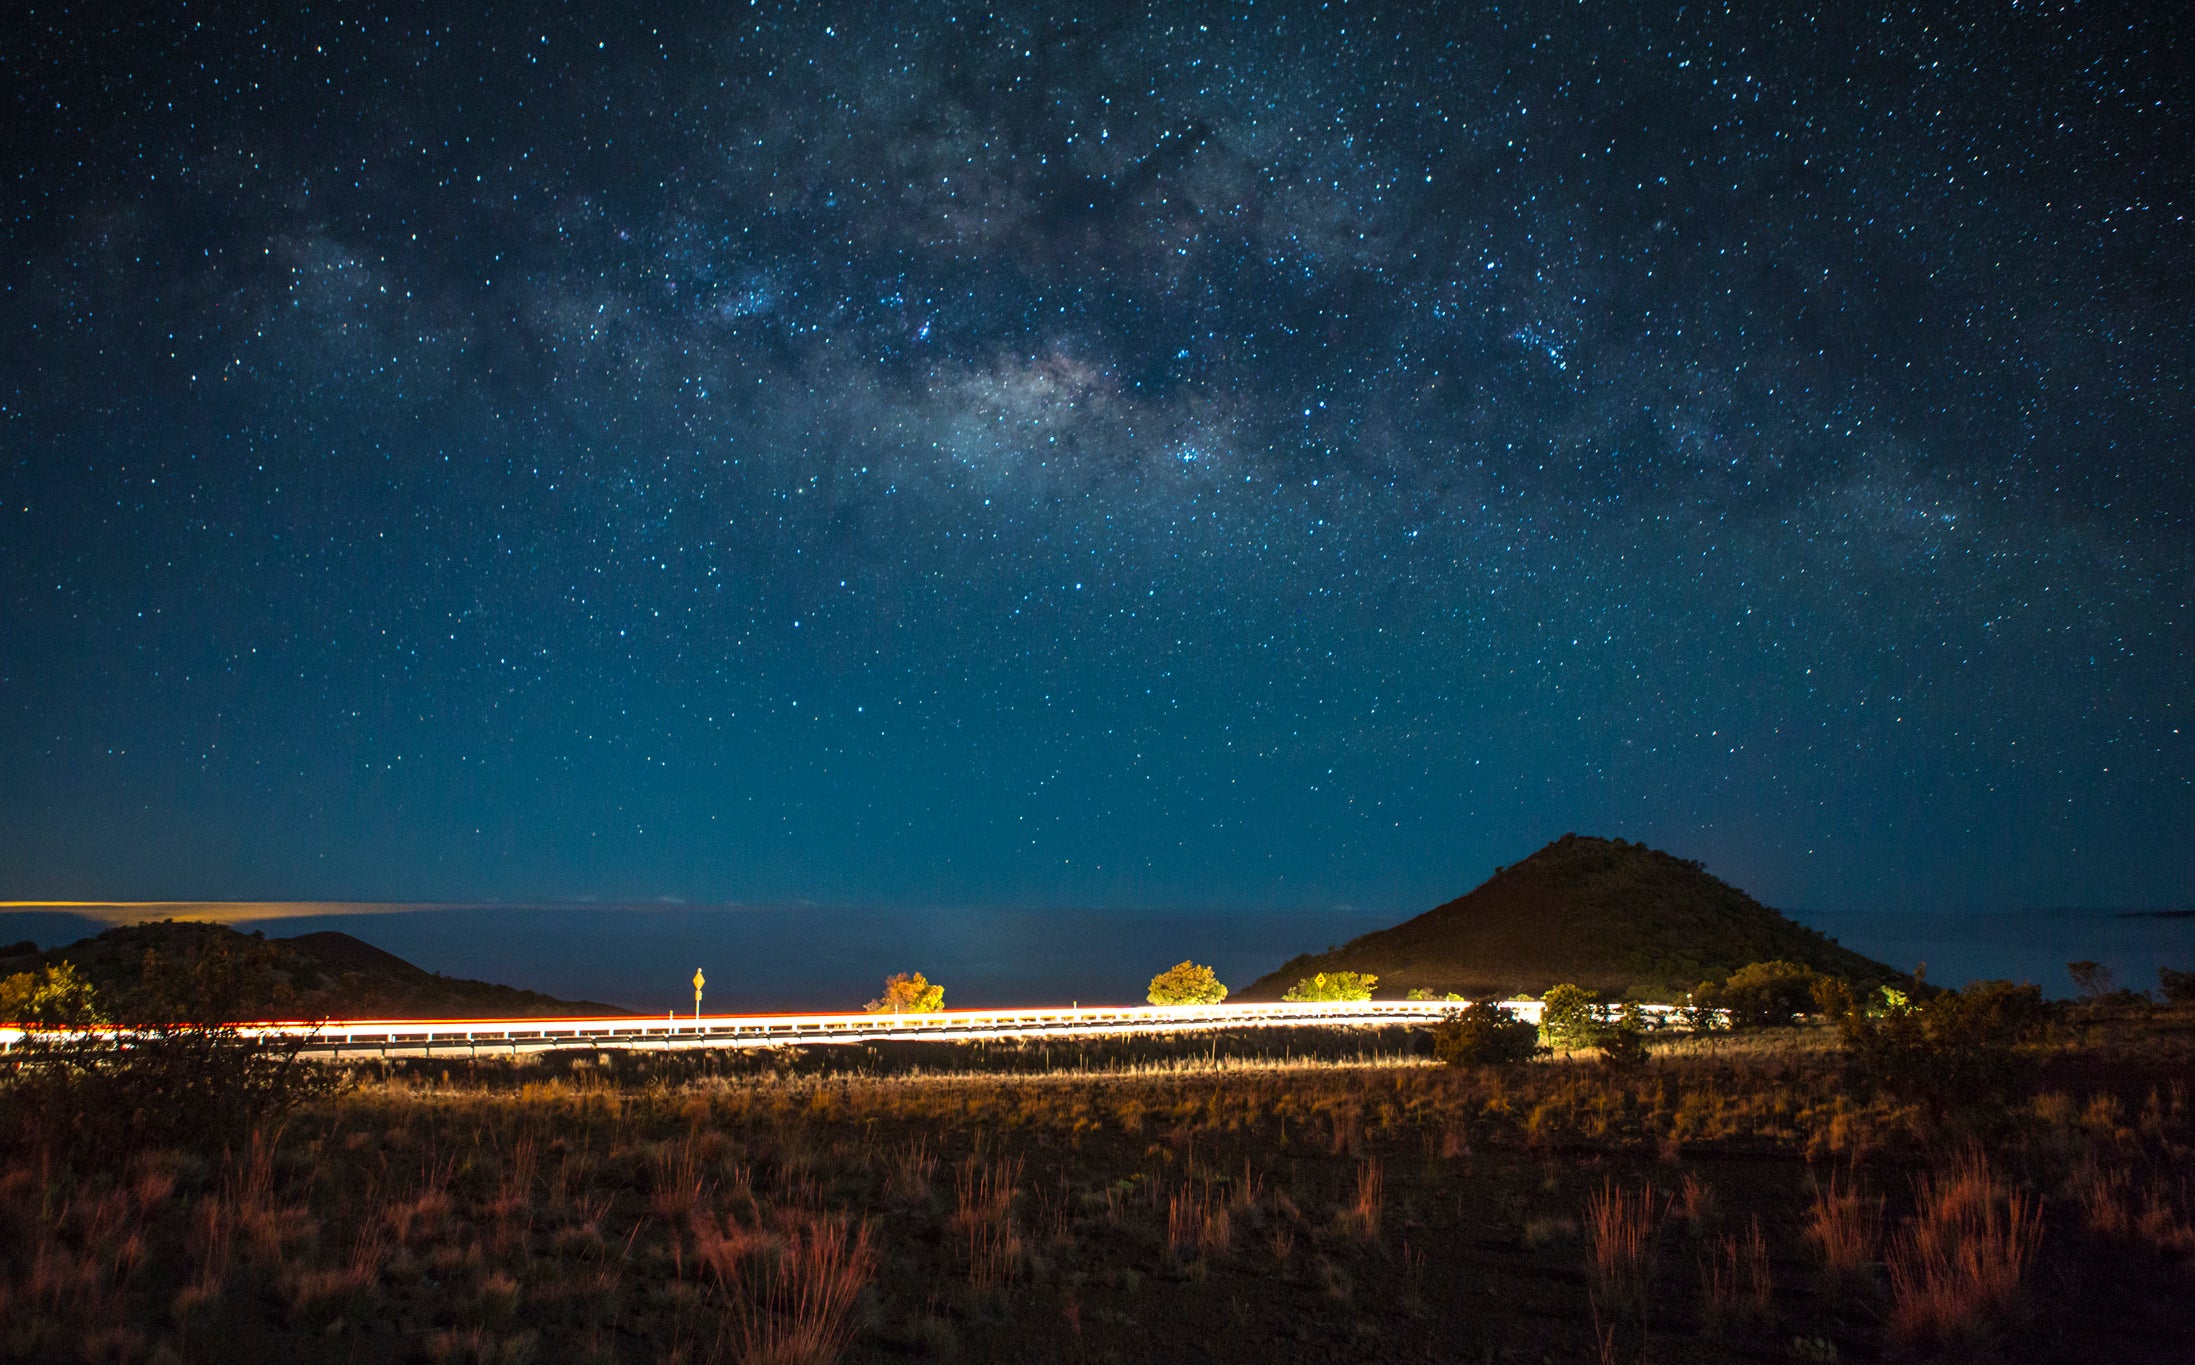  sterren staren boven de wolken van de Mauna Kea vulkaan op Hawaï. (foto: JT Sorrell)